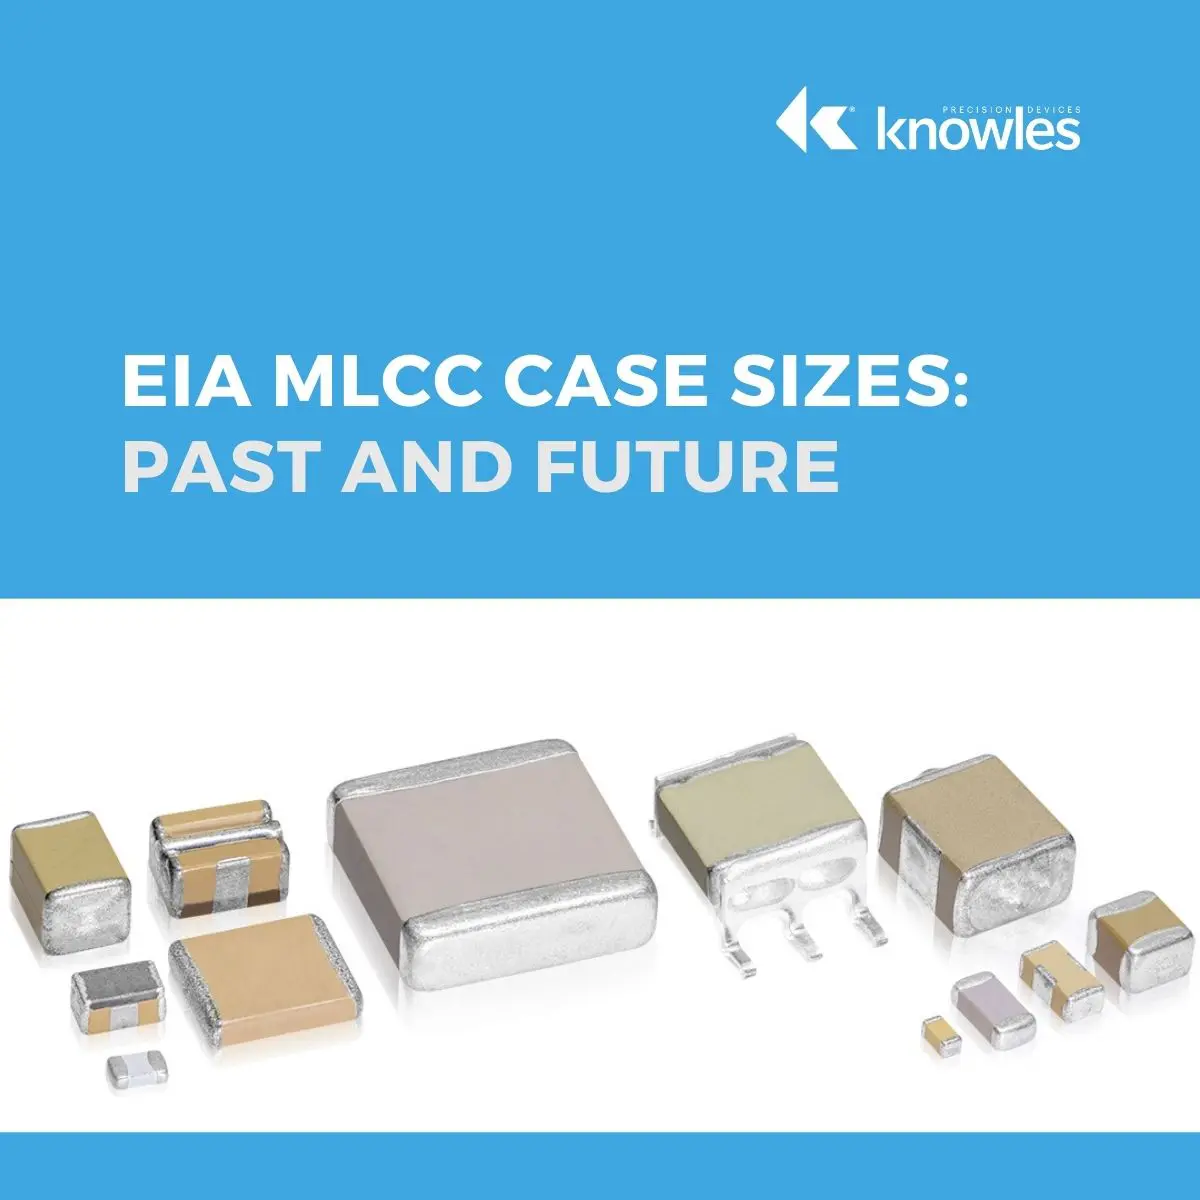 EIA MLCC Case Sizes: Past and Future